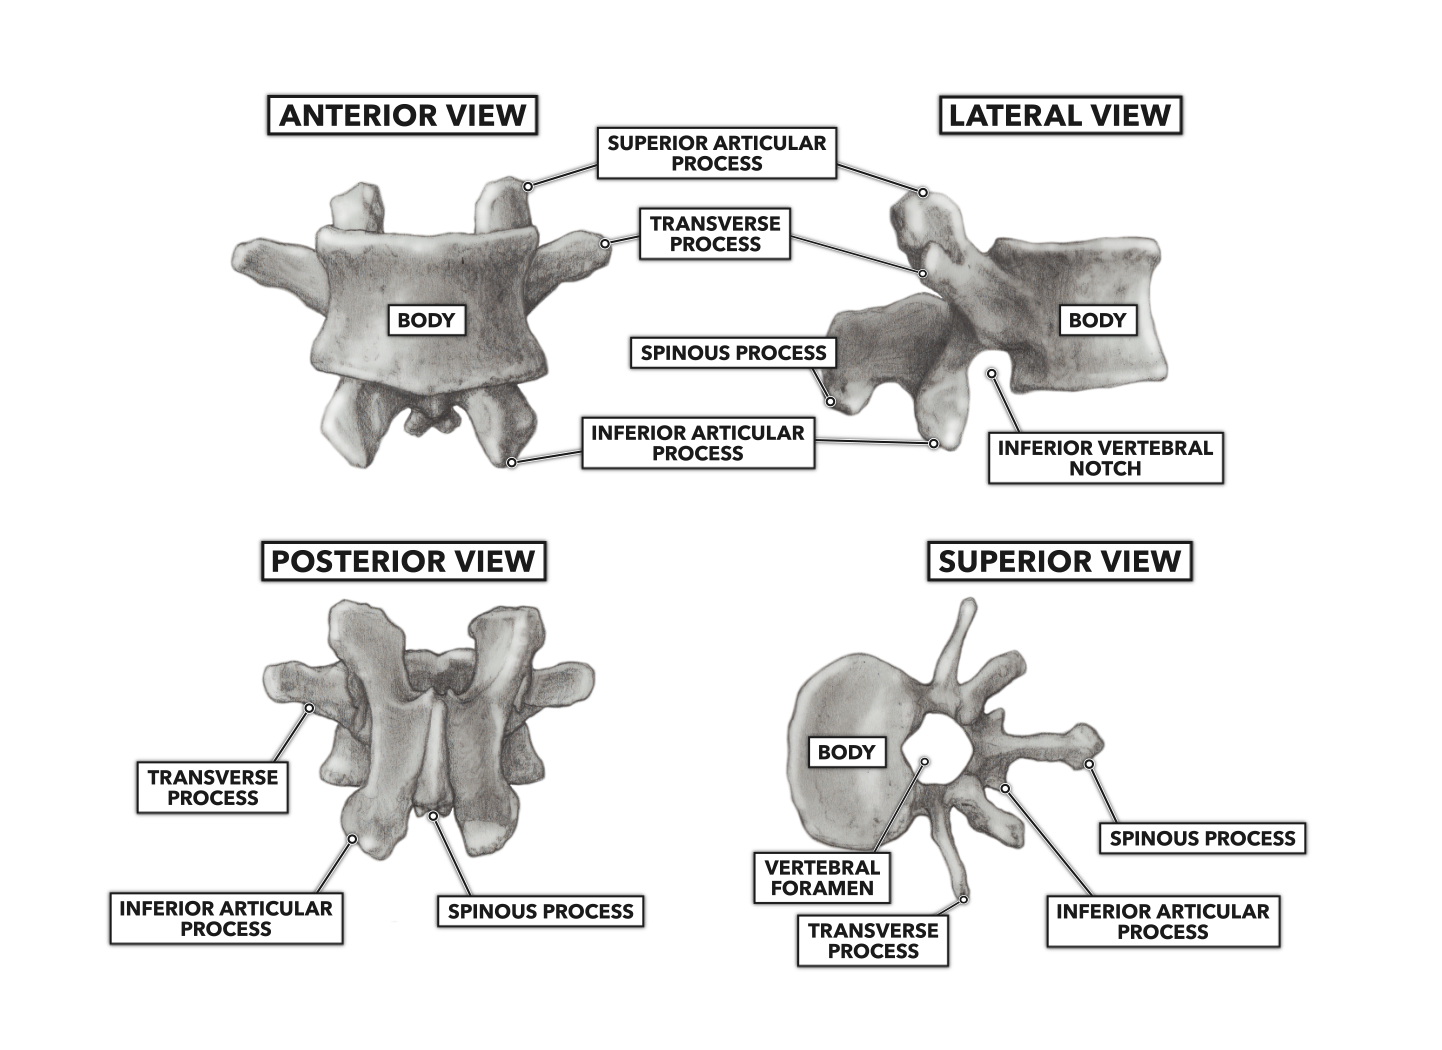 Parts Of A Vertebra